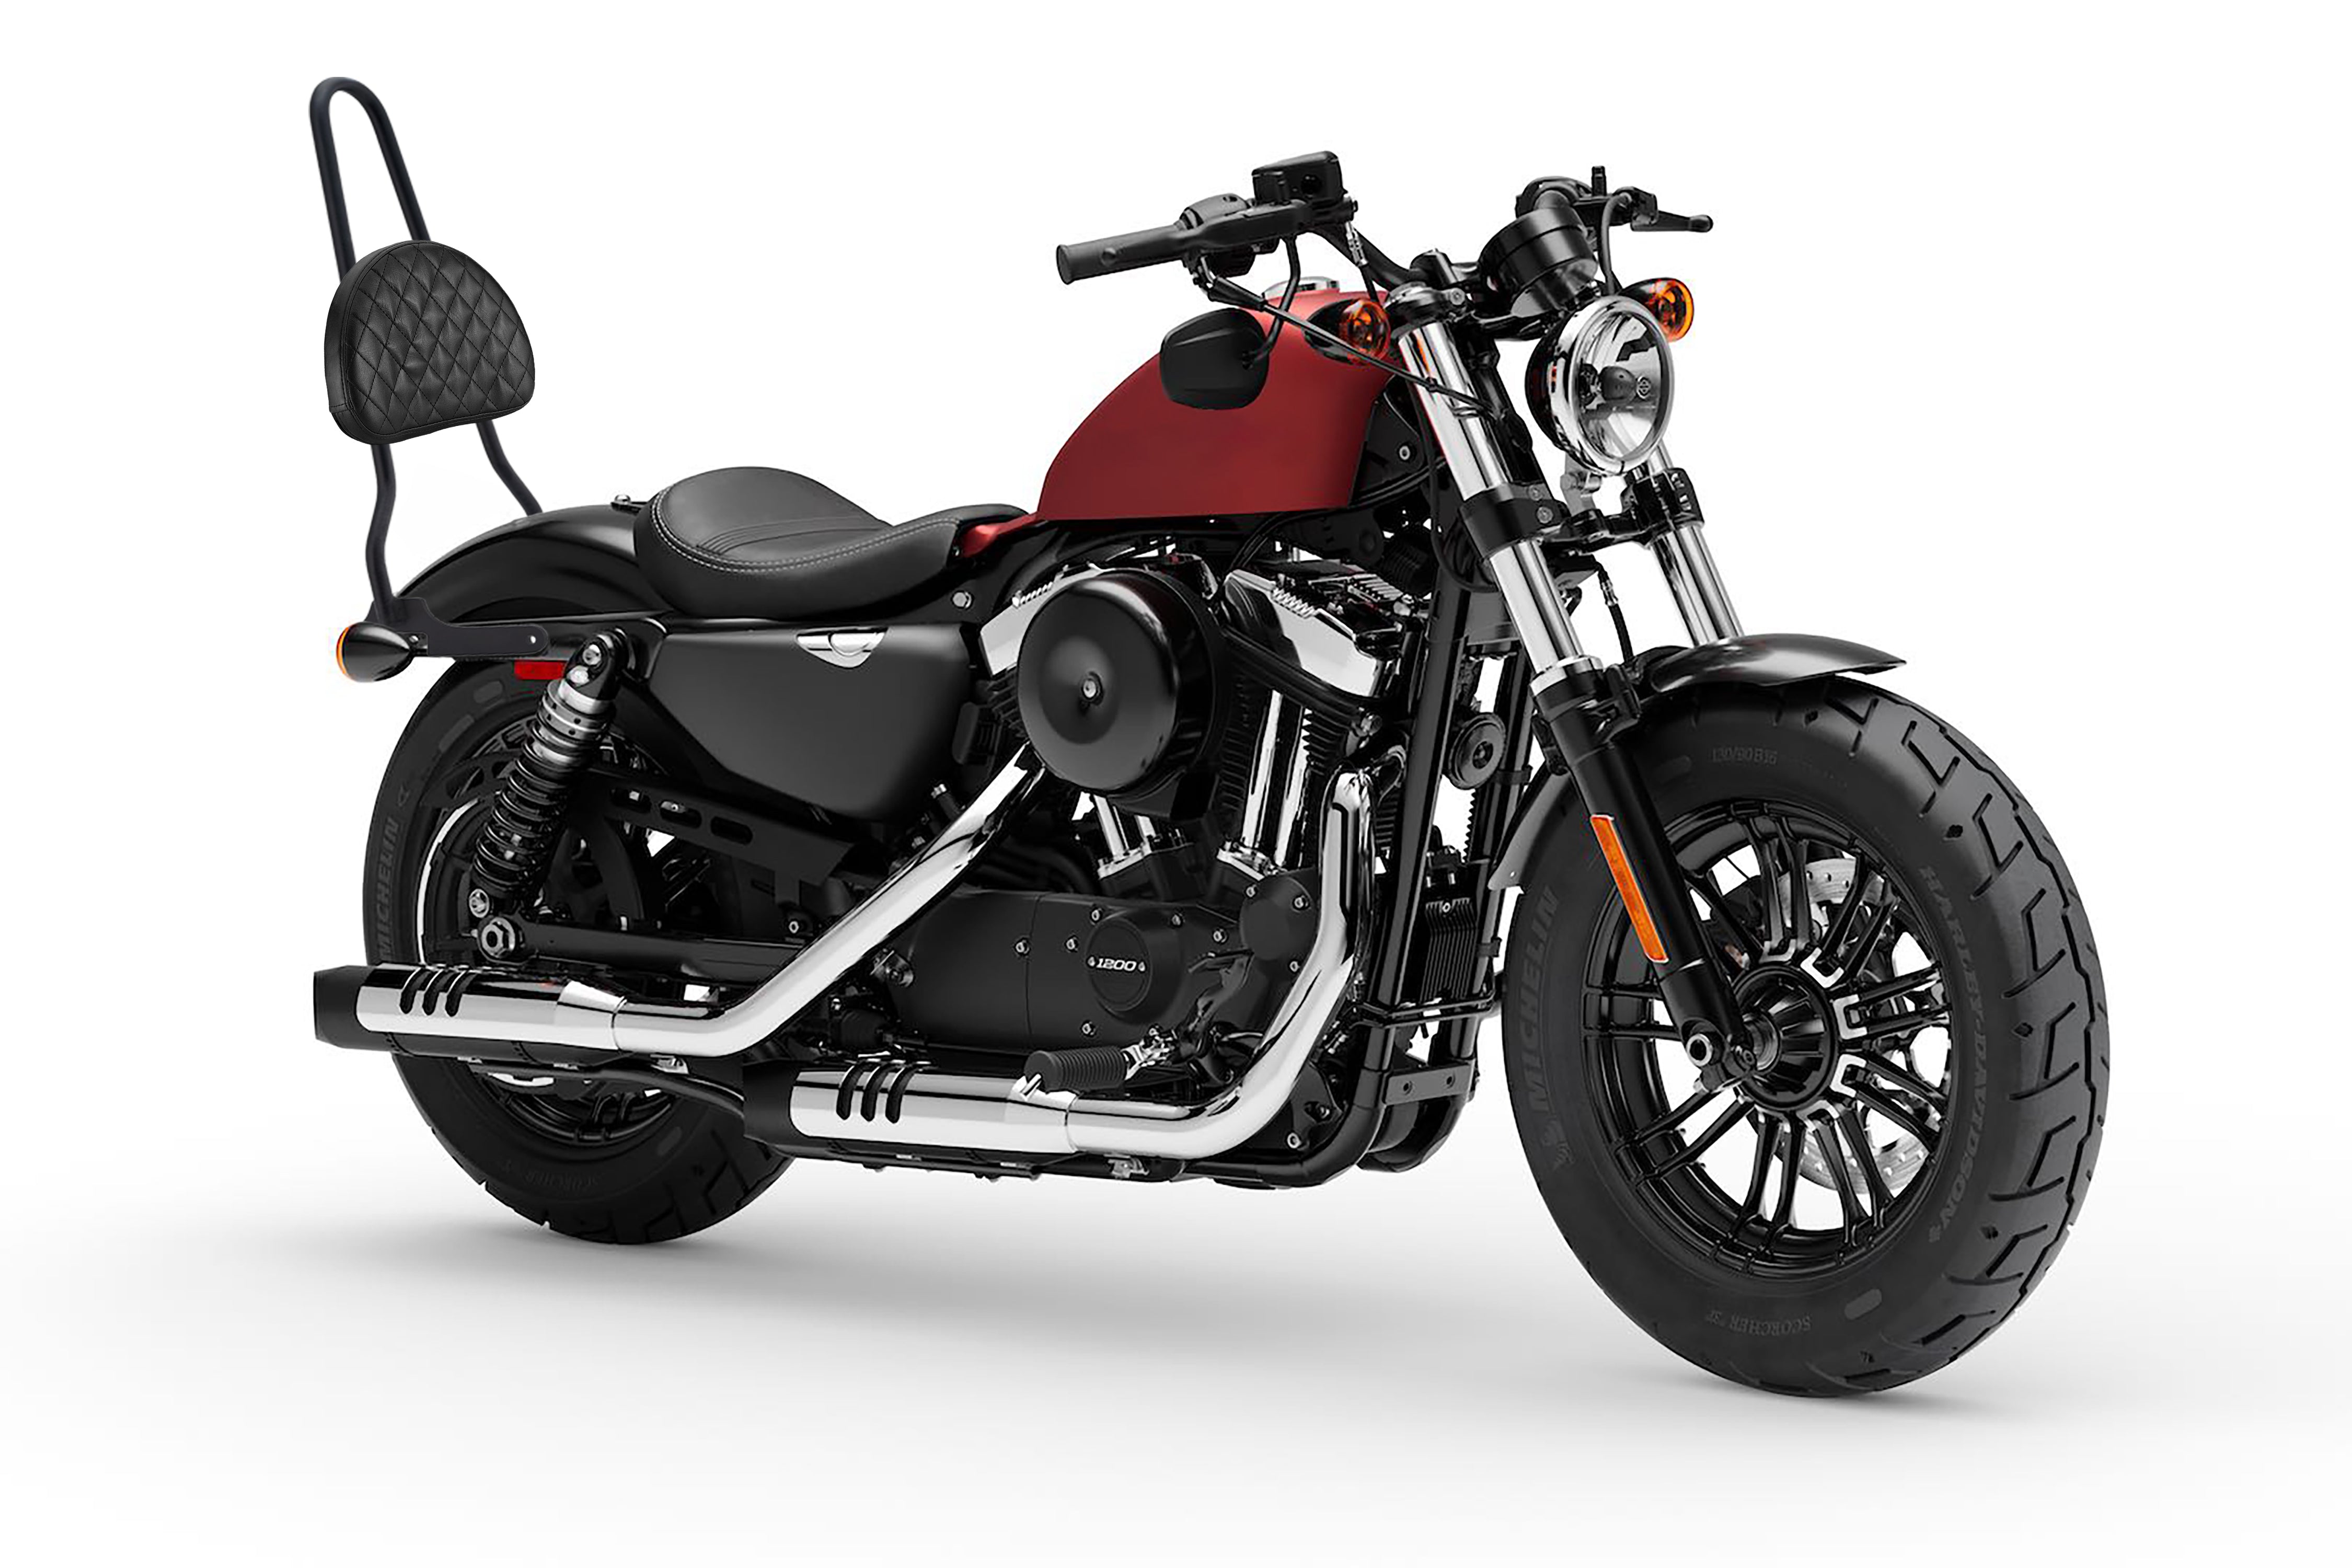 Viking Iron Born Crescent Diamond Stitch Leather Motorcycle Sissy Bar Pad for Harley Davidson Bag on Bike View @expand